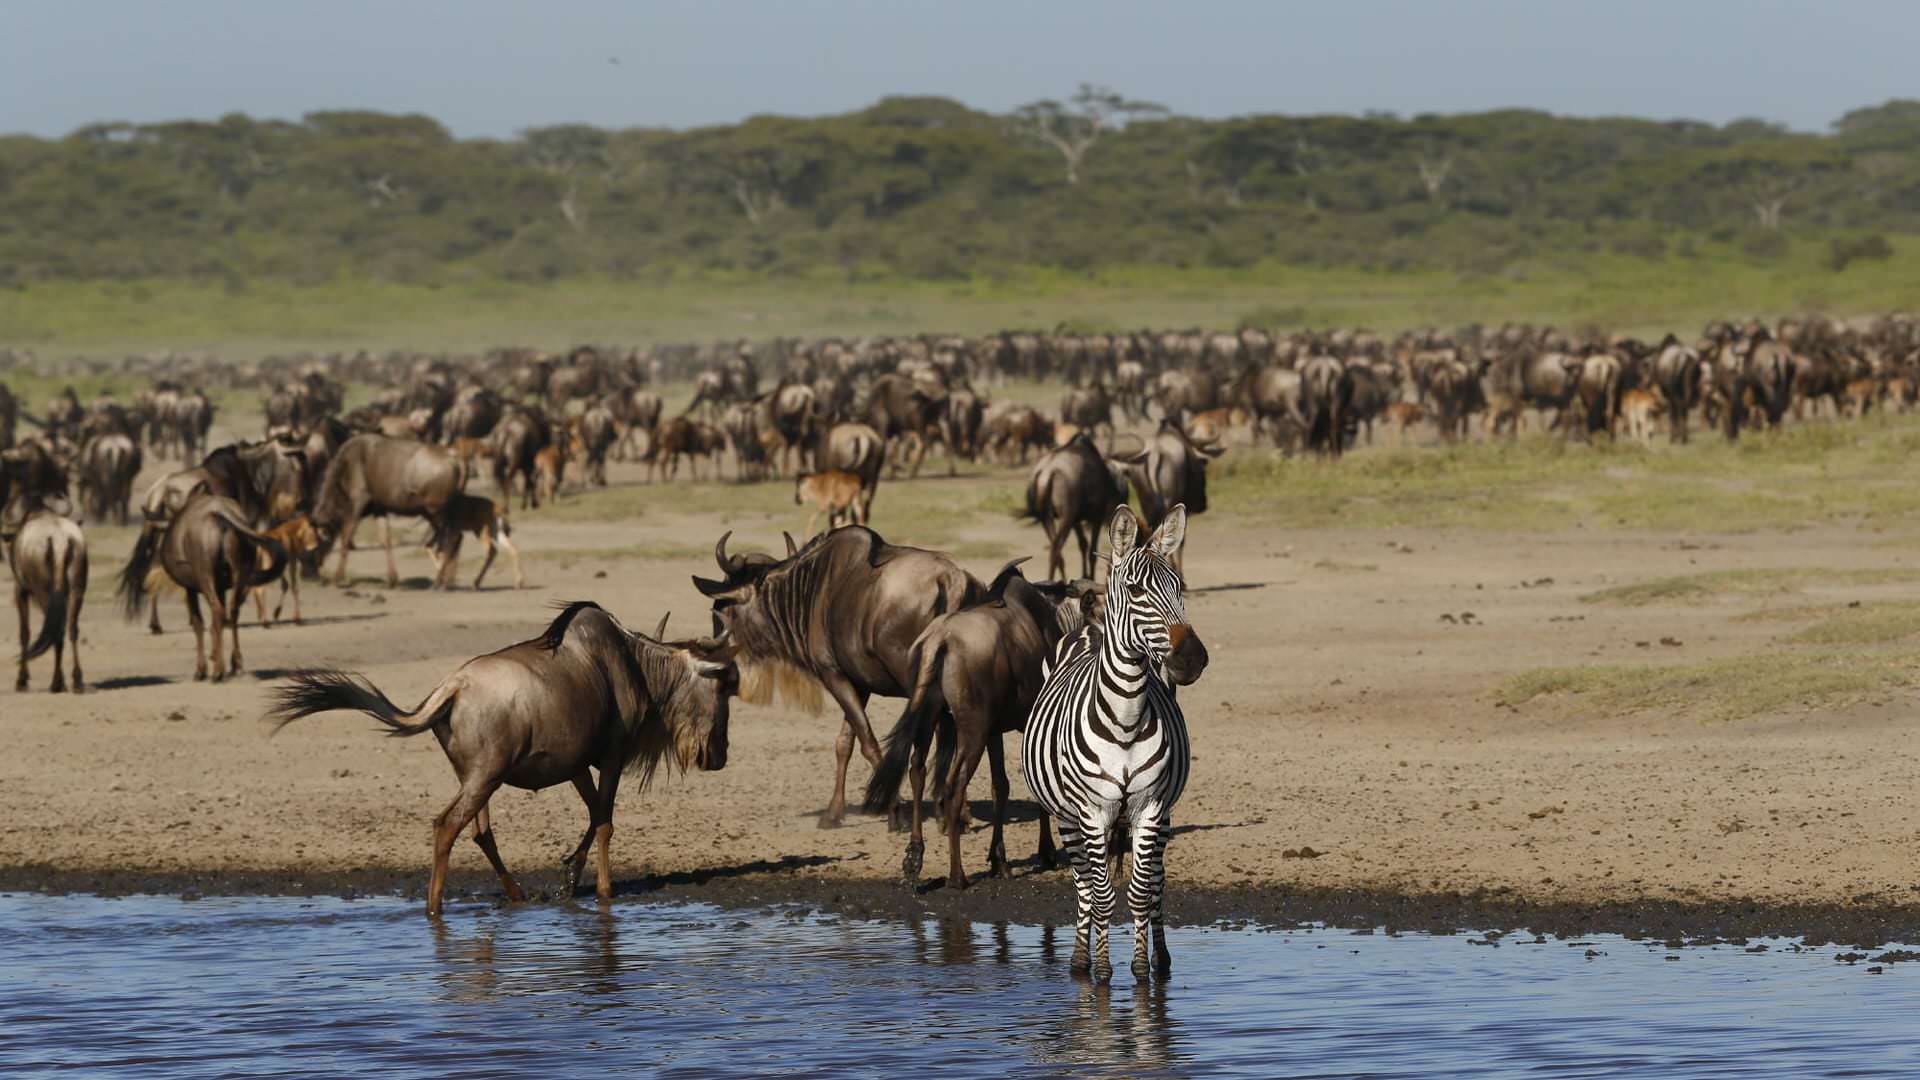 Wildebeest herd at waterhole with a lone Zebra